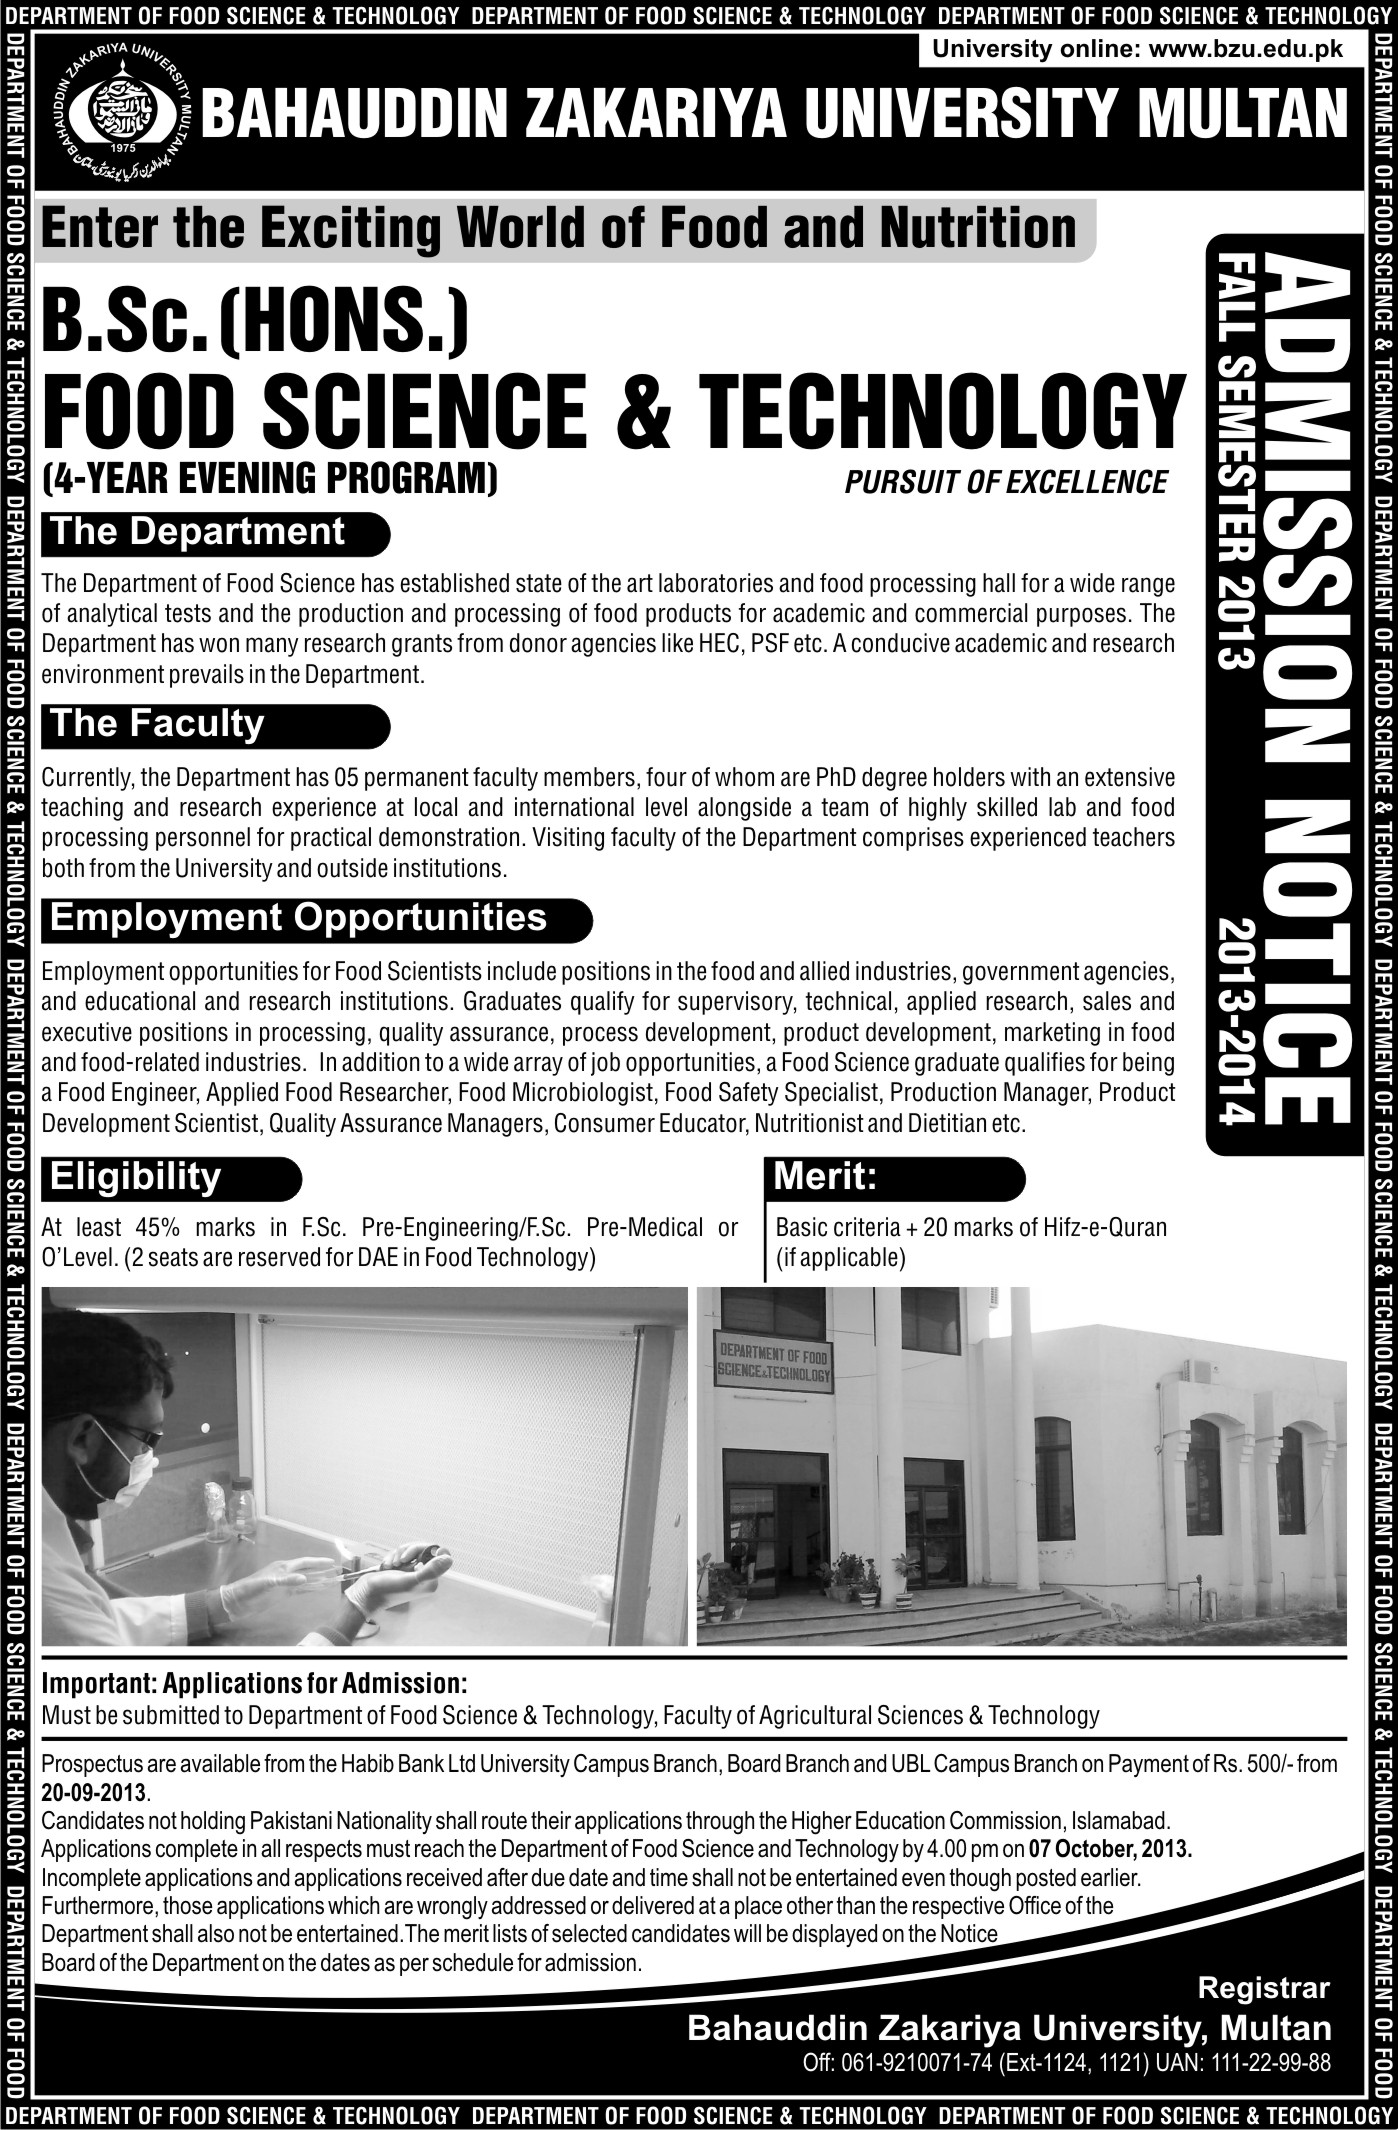 Bahauddin Zakariya University BZU Multan Admission Notice 2013 for BSc Hons Food Science and Technology 1